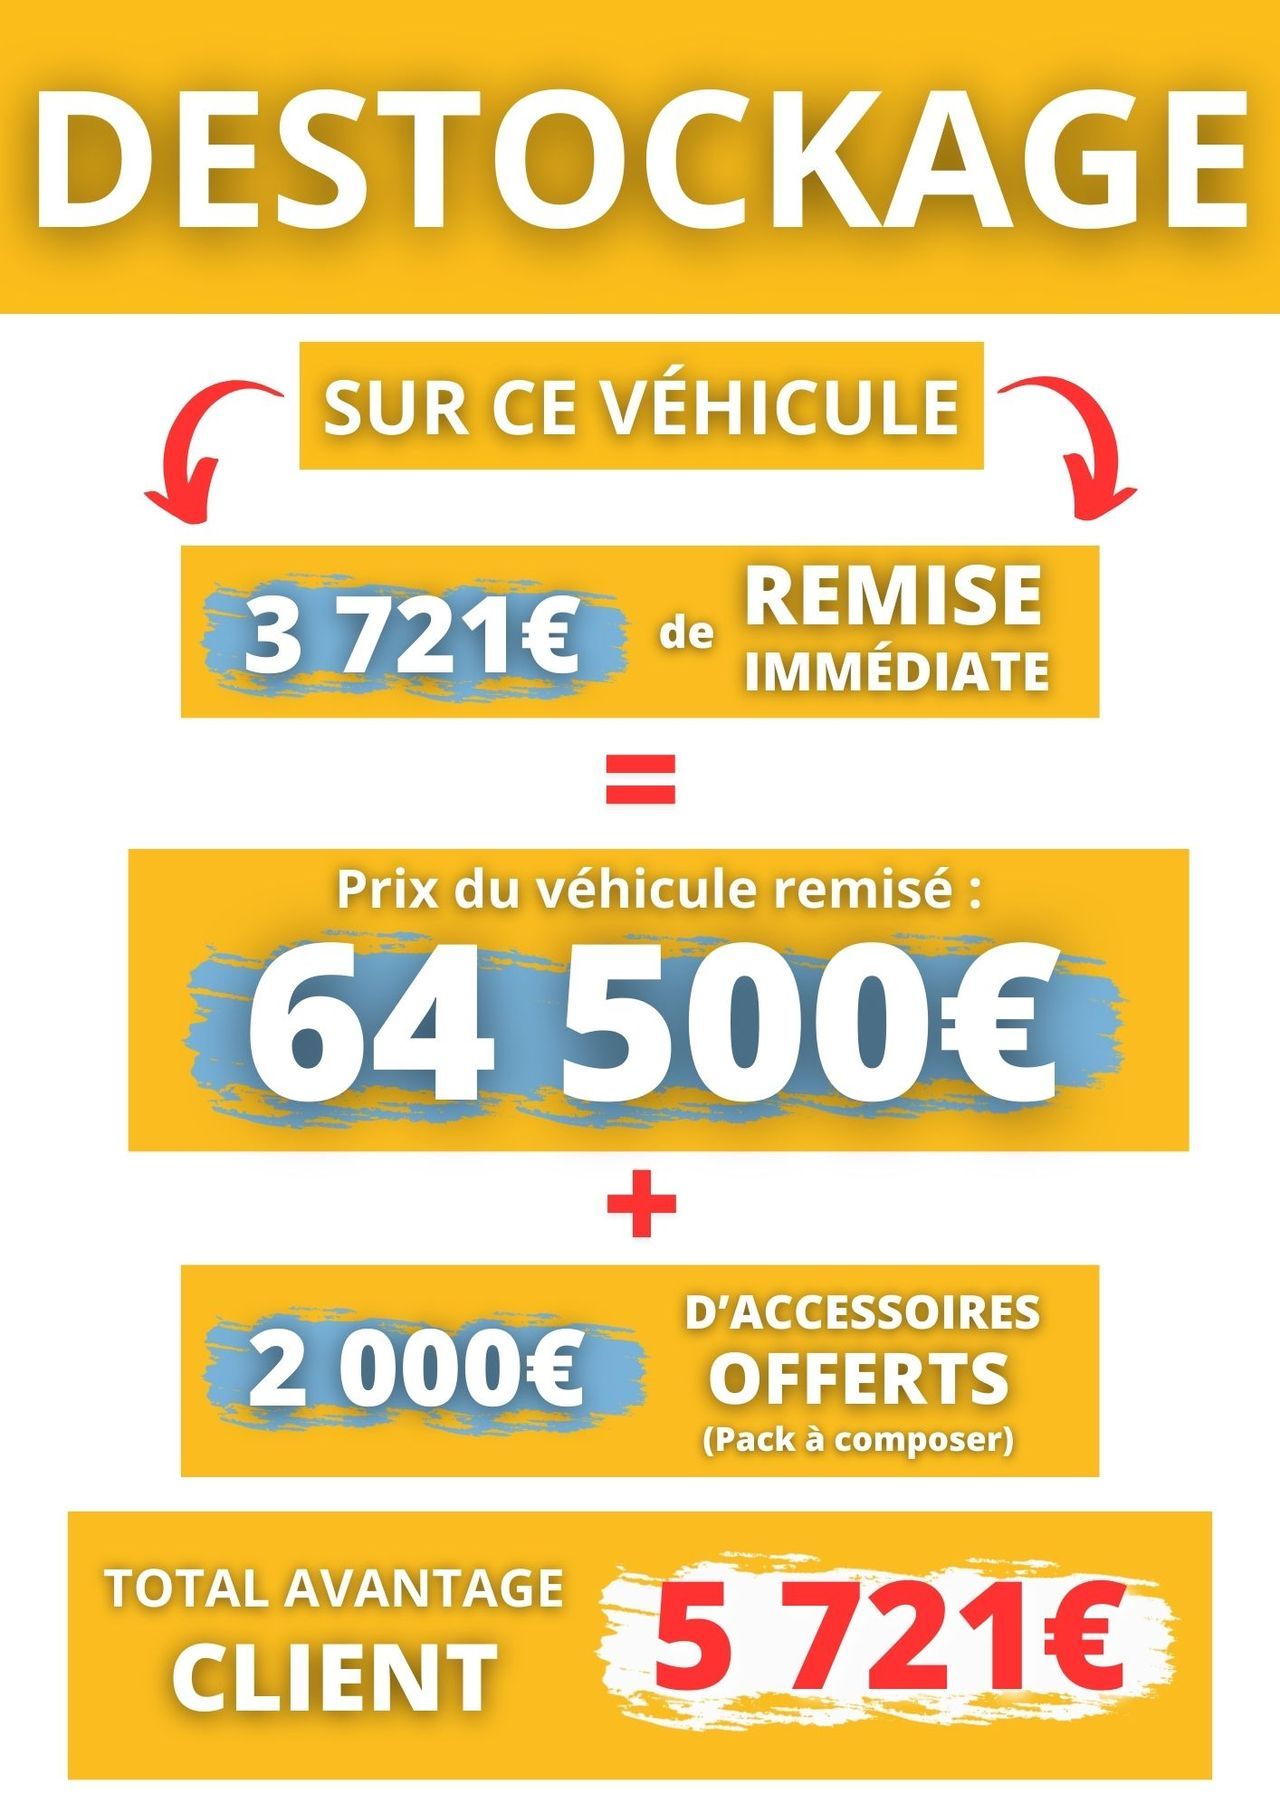 V6.8 SR / 2 000€ D'ACCESSOIRES OFFERTS